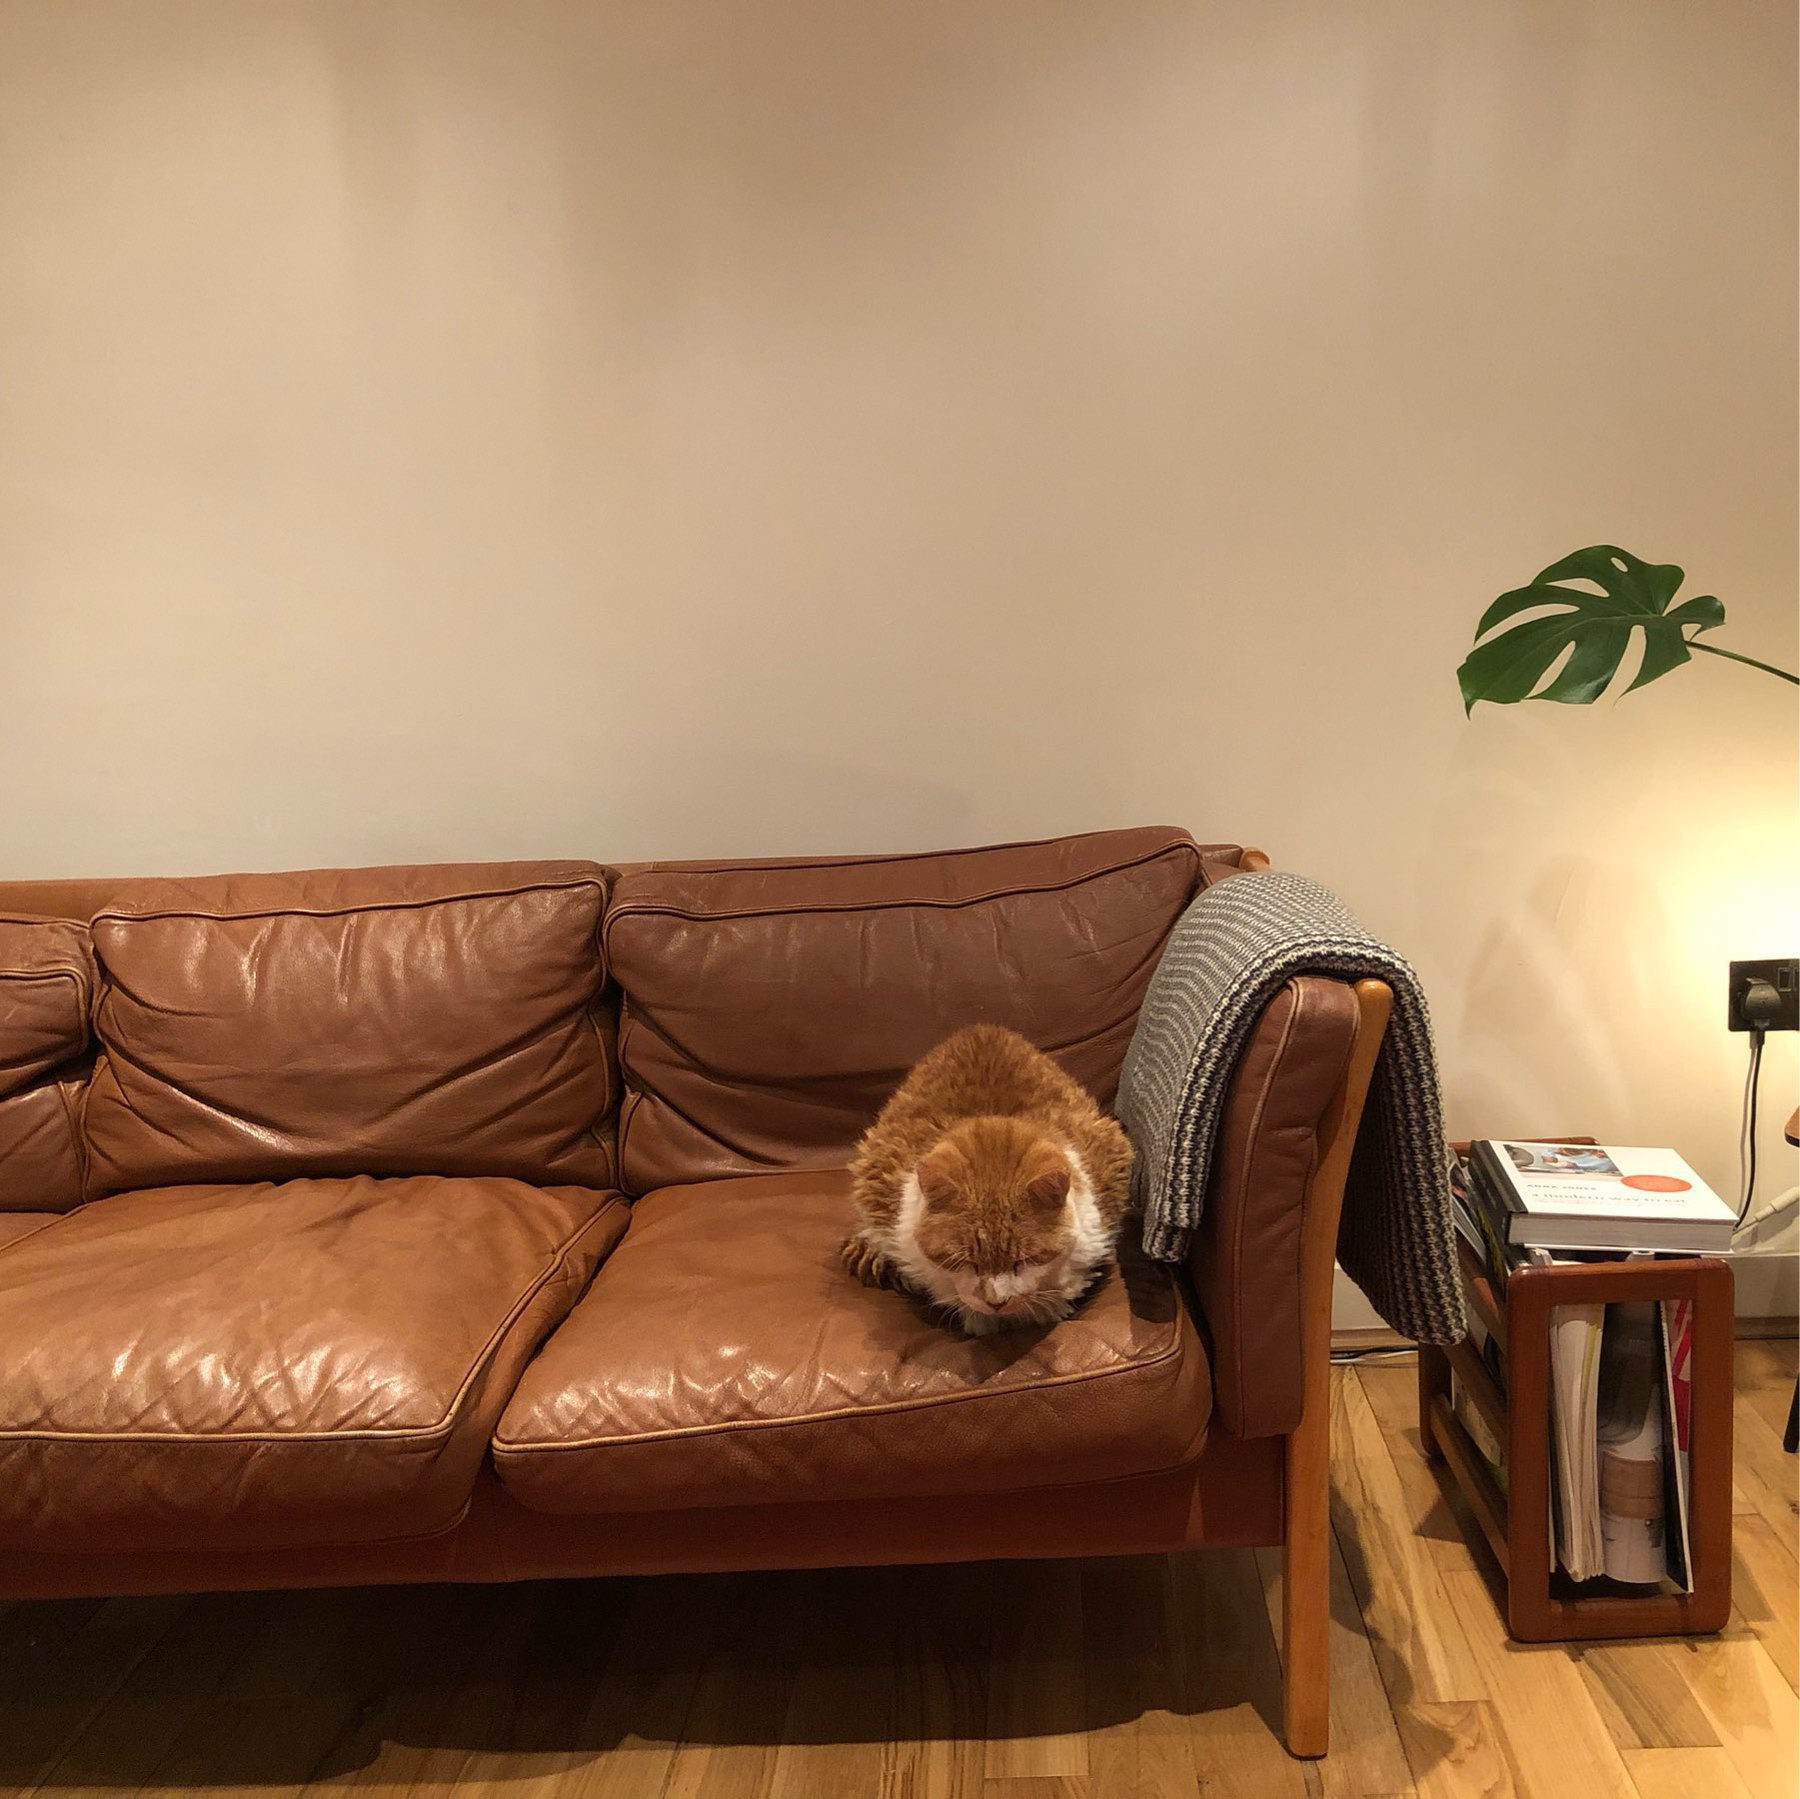 Orange cat in leather brown sofa